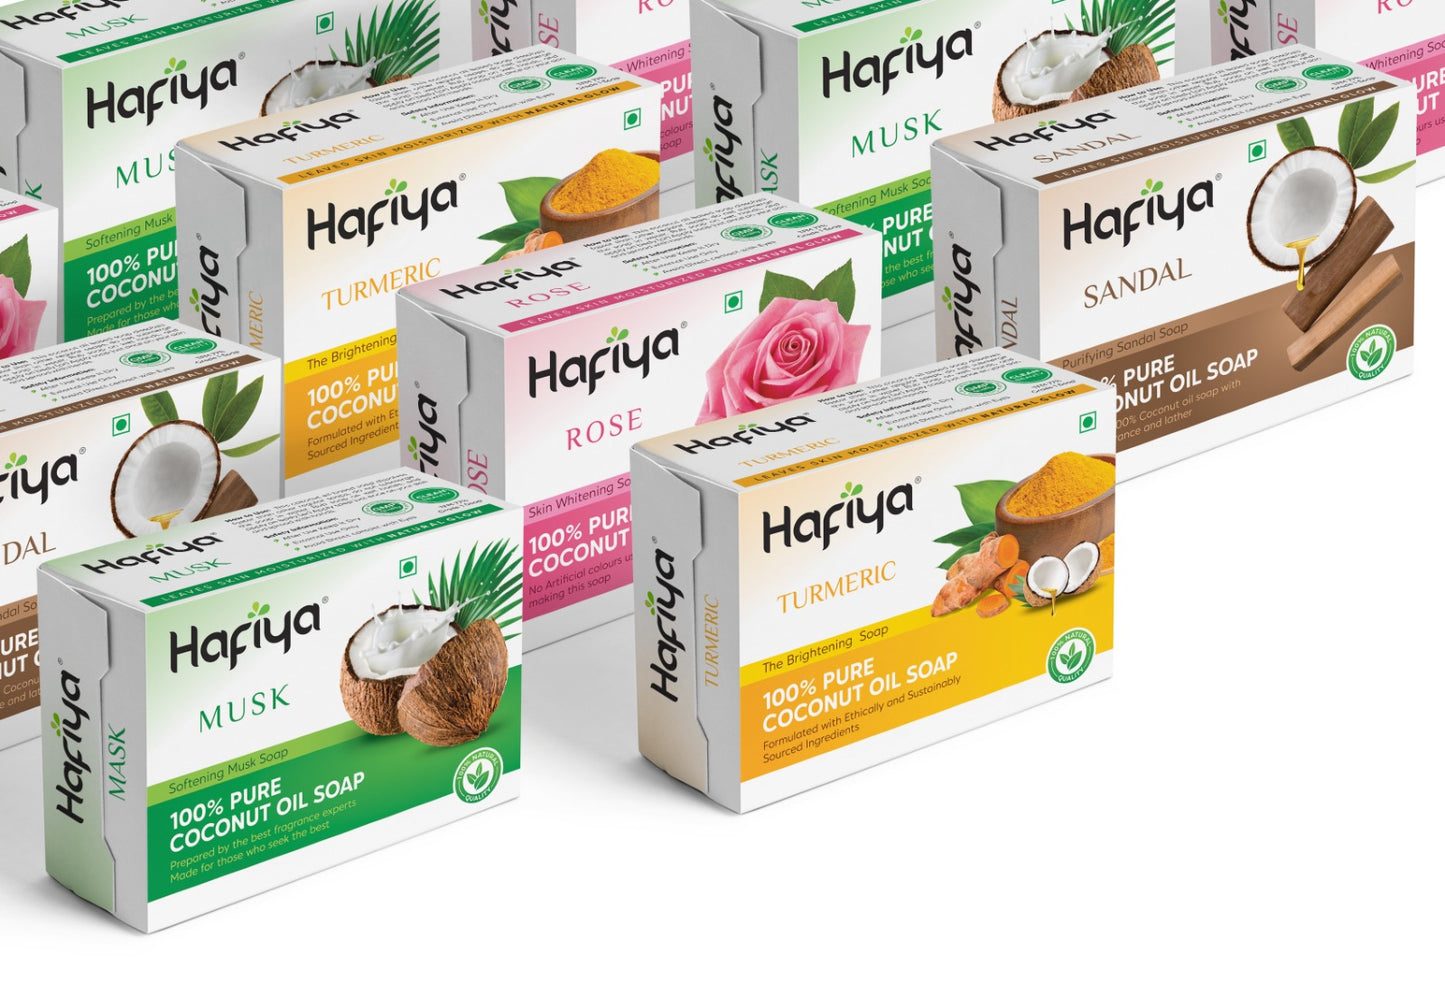 Hafiya 100% Coconut Oil - Turmeric Soap - Faritha